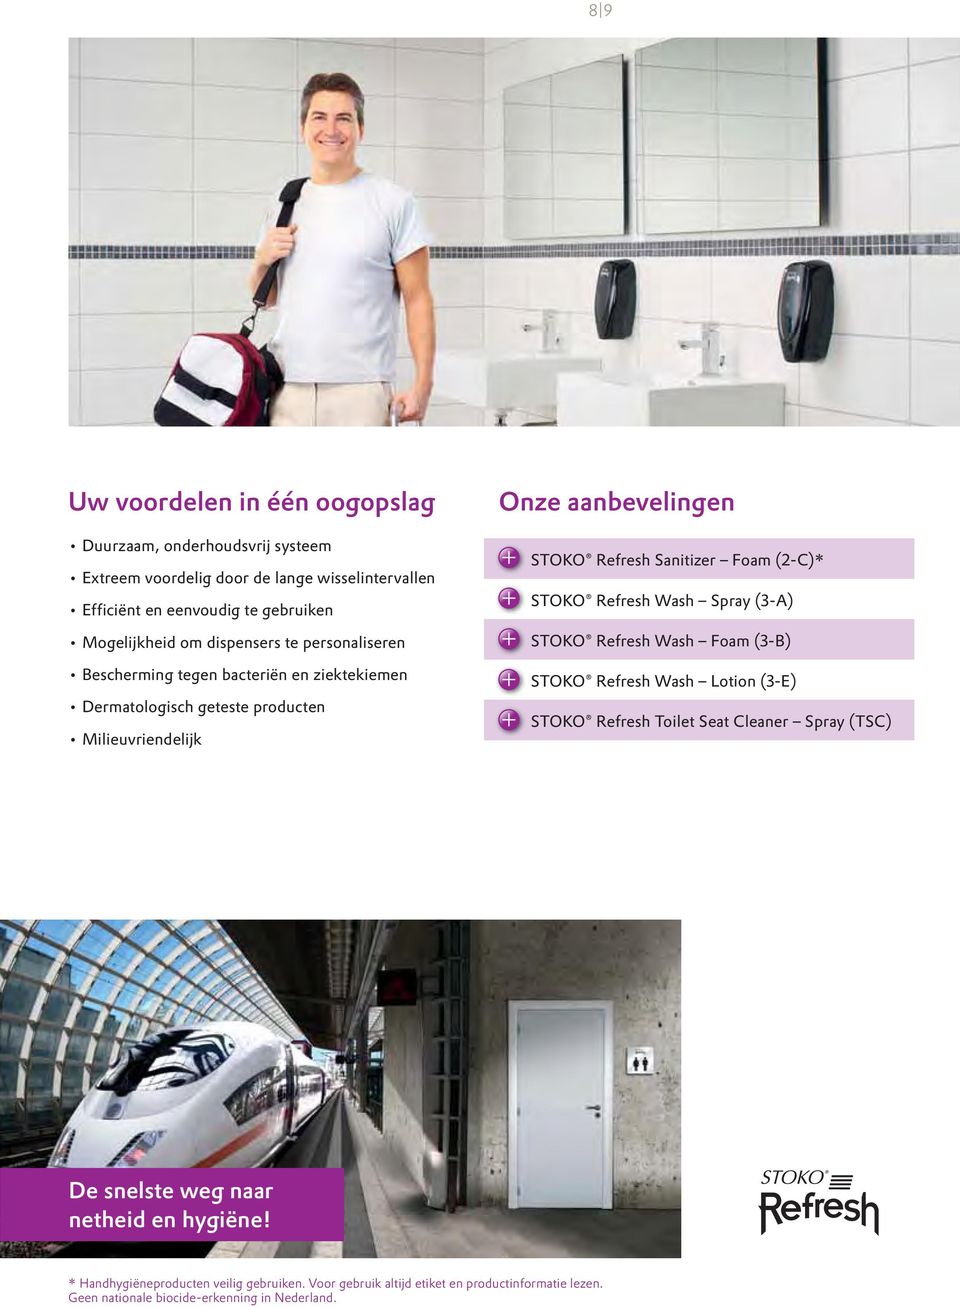 Sanitizer Foam (2-C)* STOKO Refresh Wash Spray (3-A) STOKO Refresh Wash Foam (3-B) STOKO Refresh Wash Lotion (3-E) STOKO Refresh Toilet Seat Cleaner Spray (TSC) De